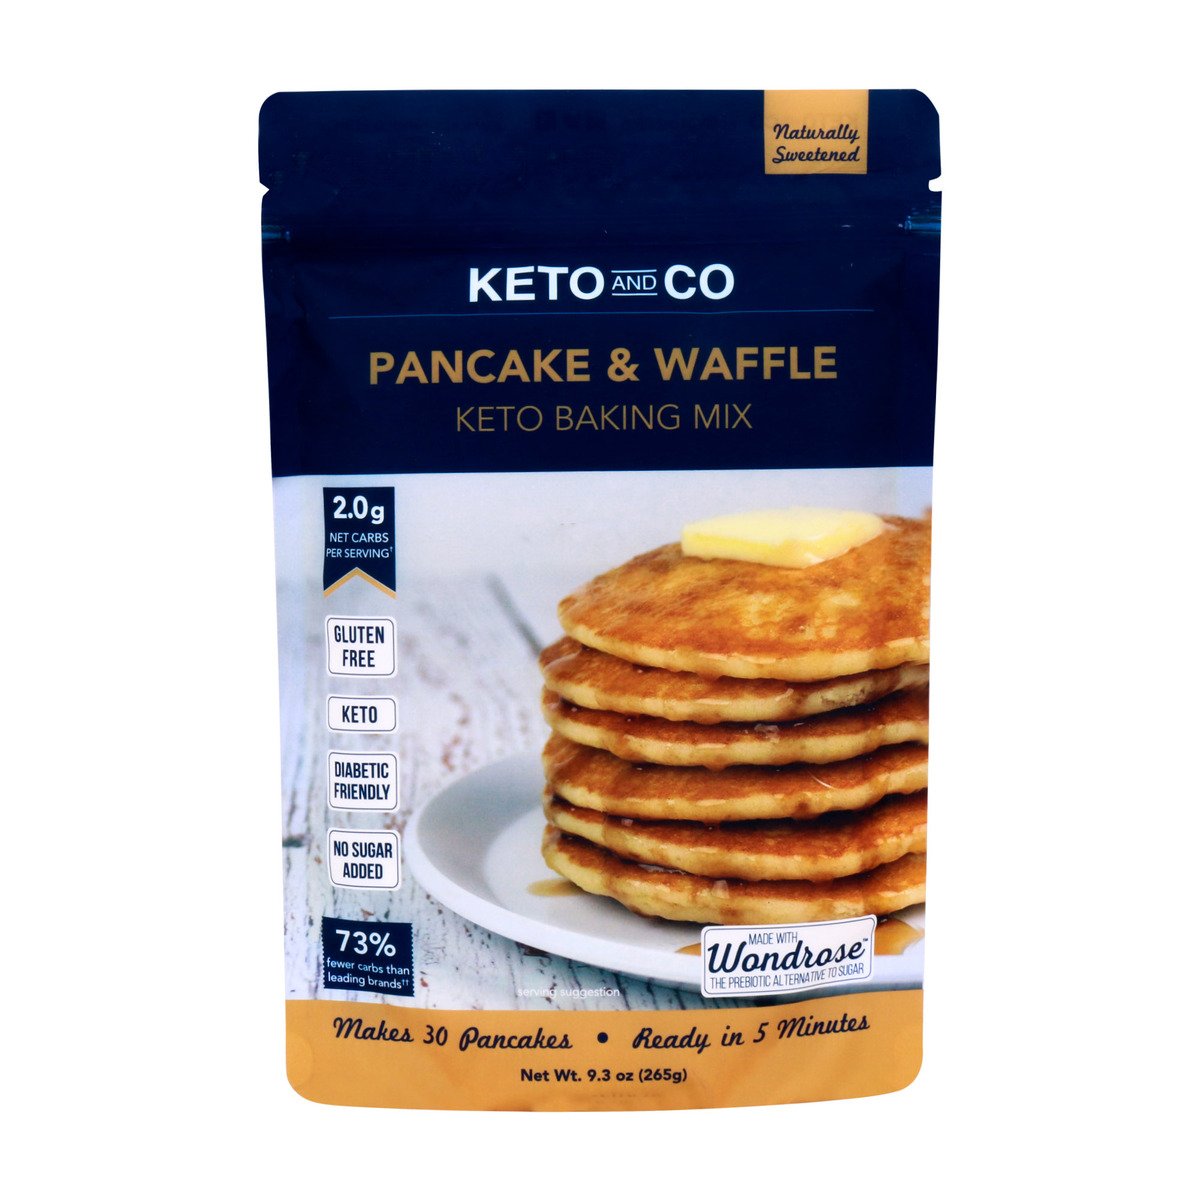 Keto And Co Keto Baking Mix Pancake & Waffle 265g